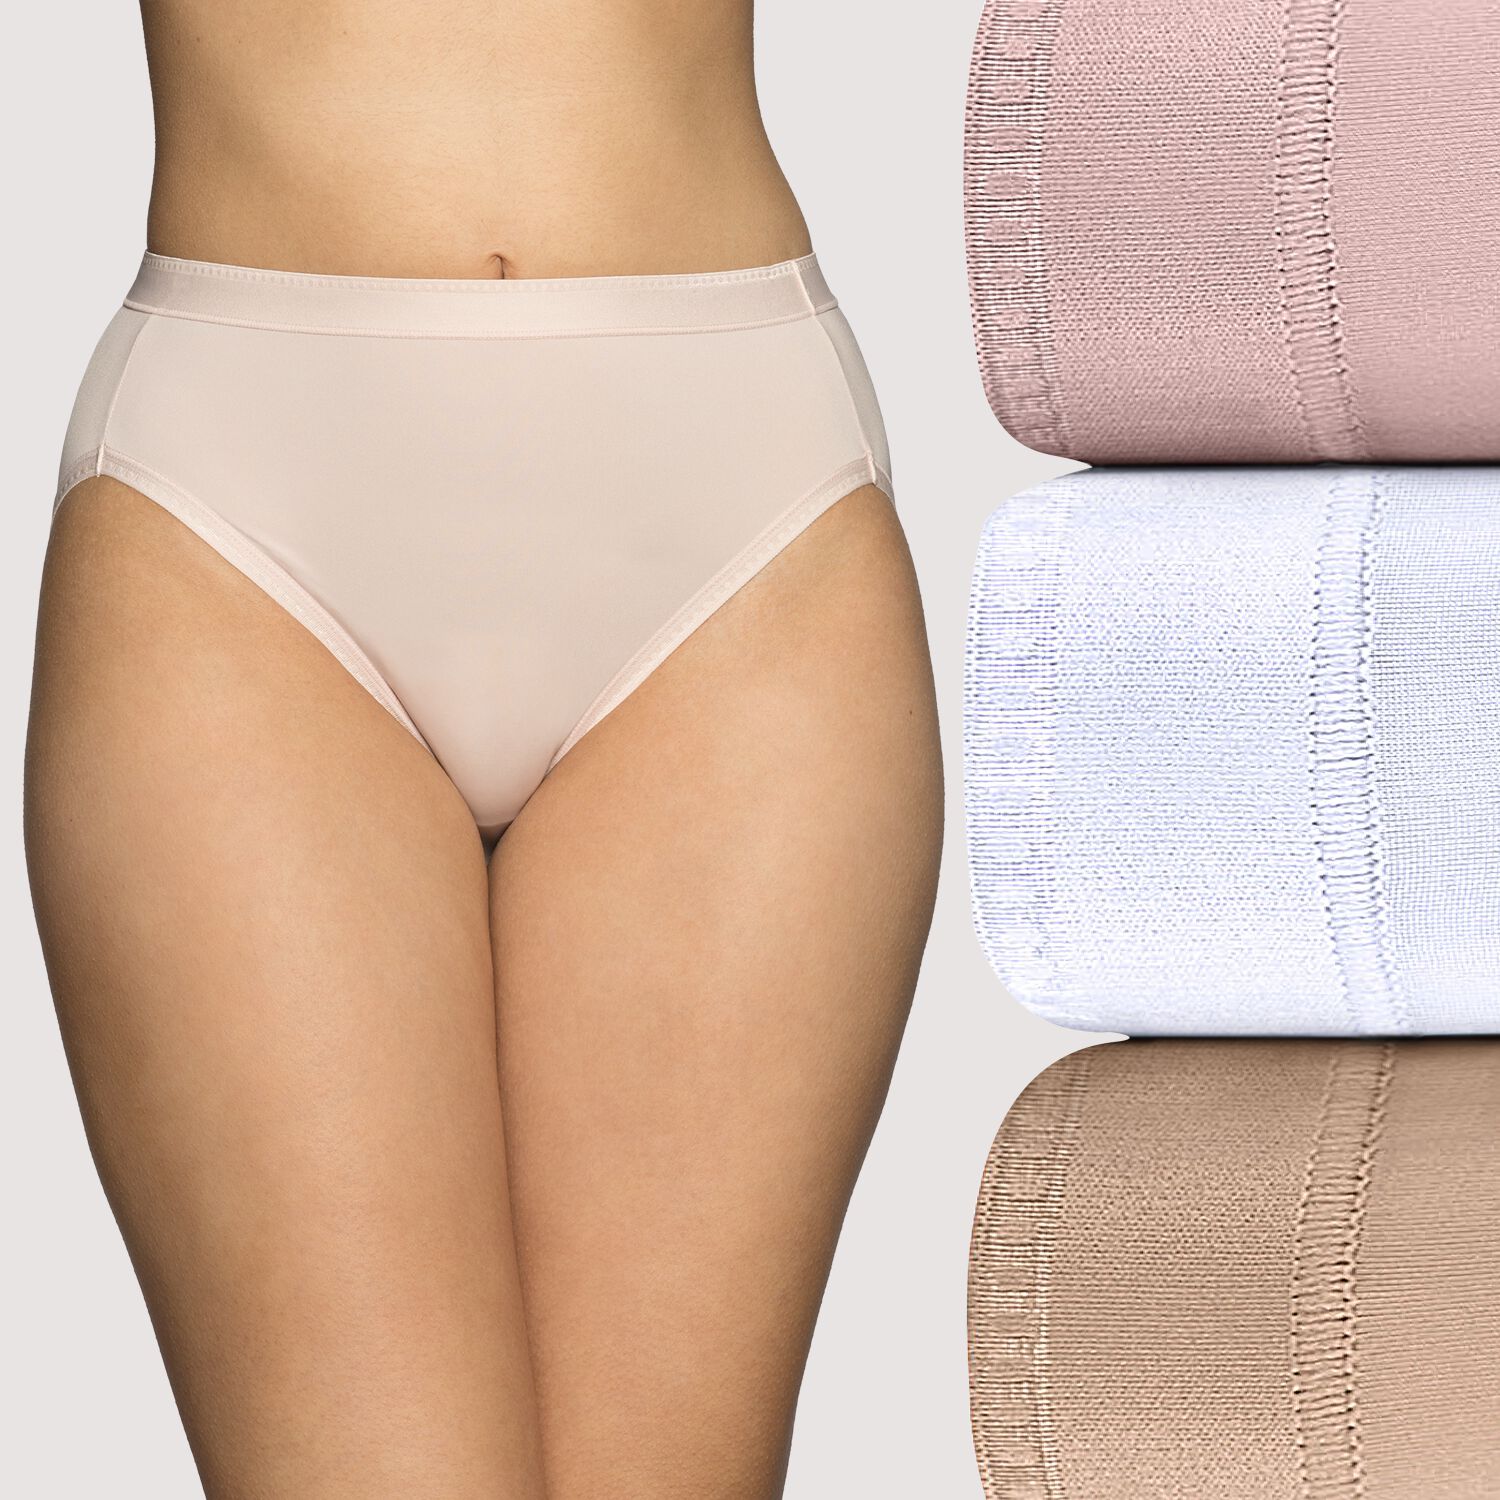 Corrective Underwear Women, Flat Belly Panties Body